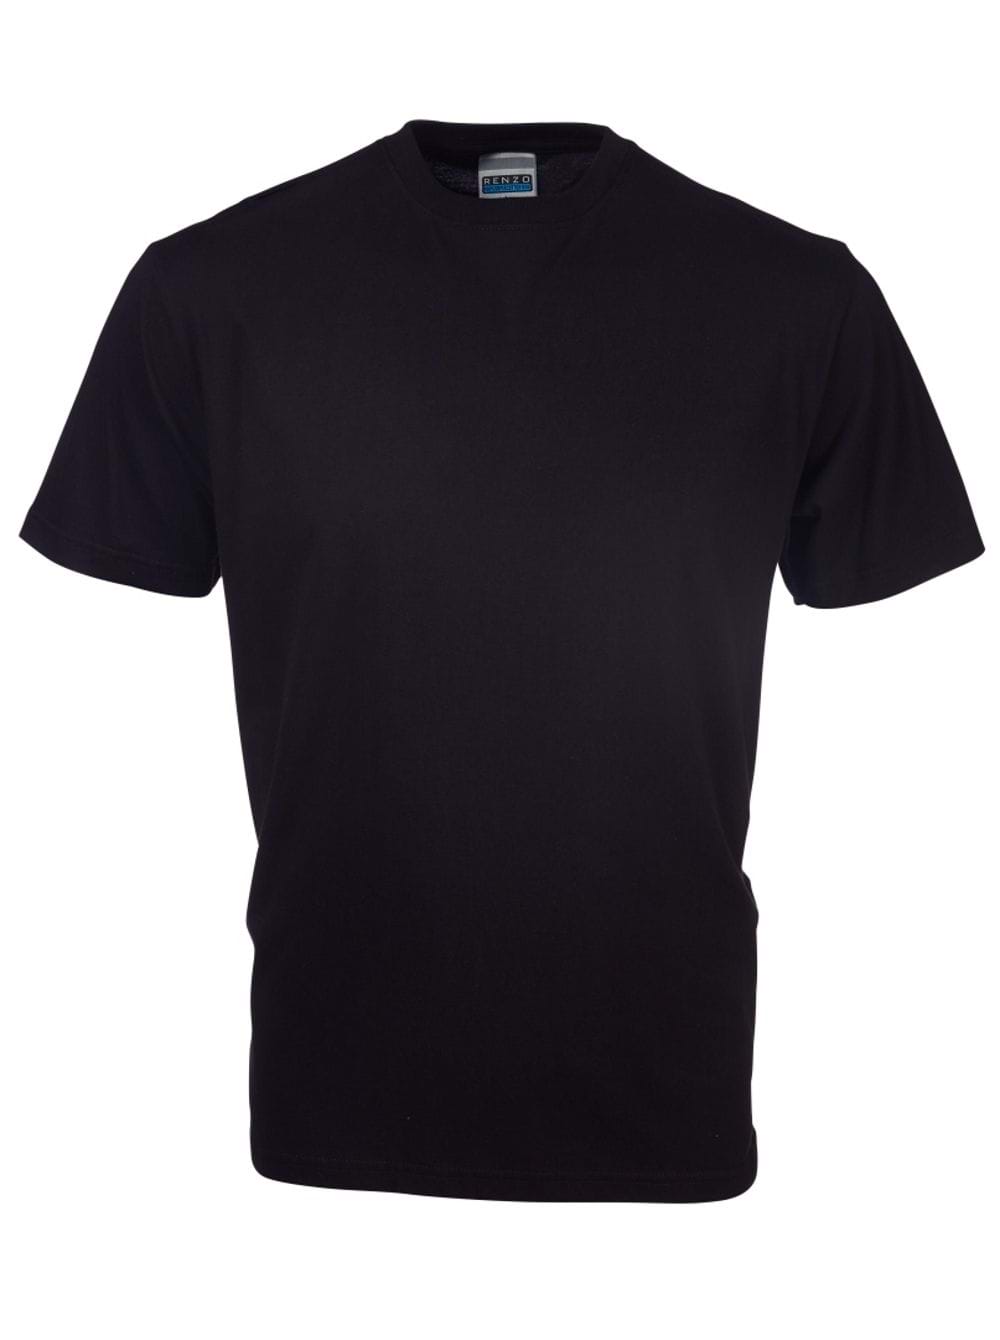 165G Crew Neck T-Shirt - Black / XL